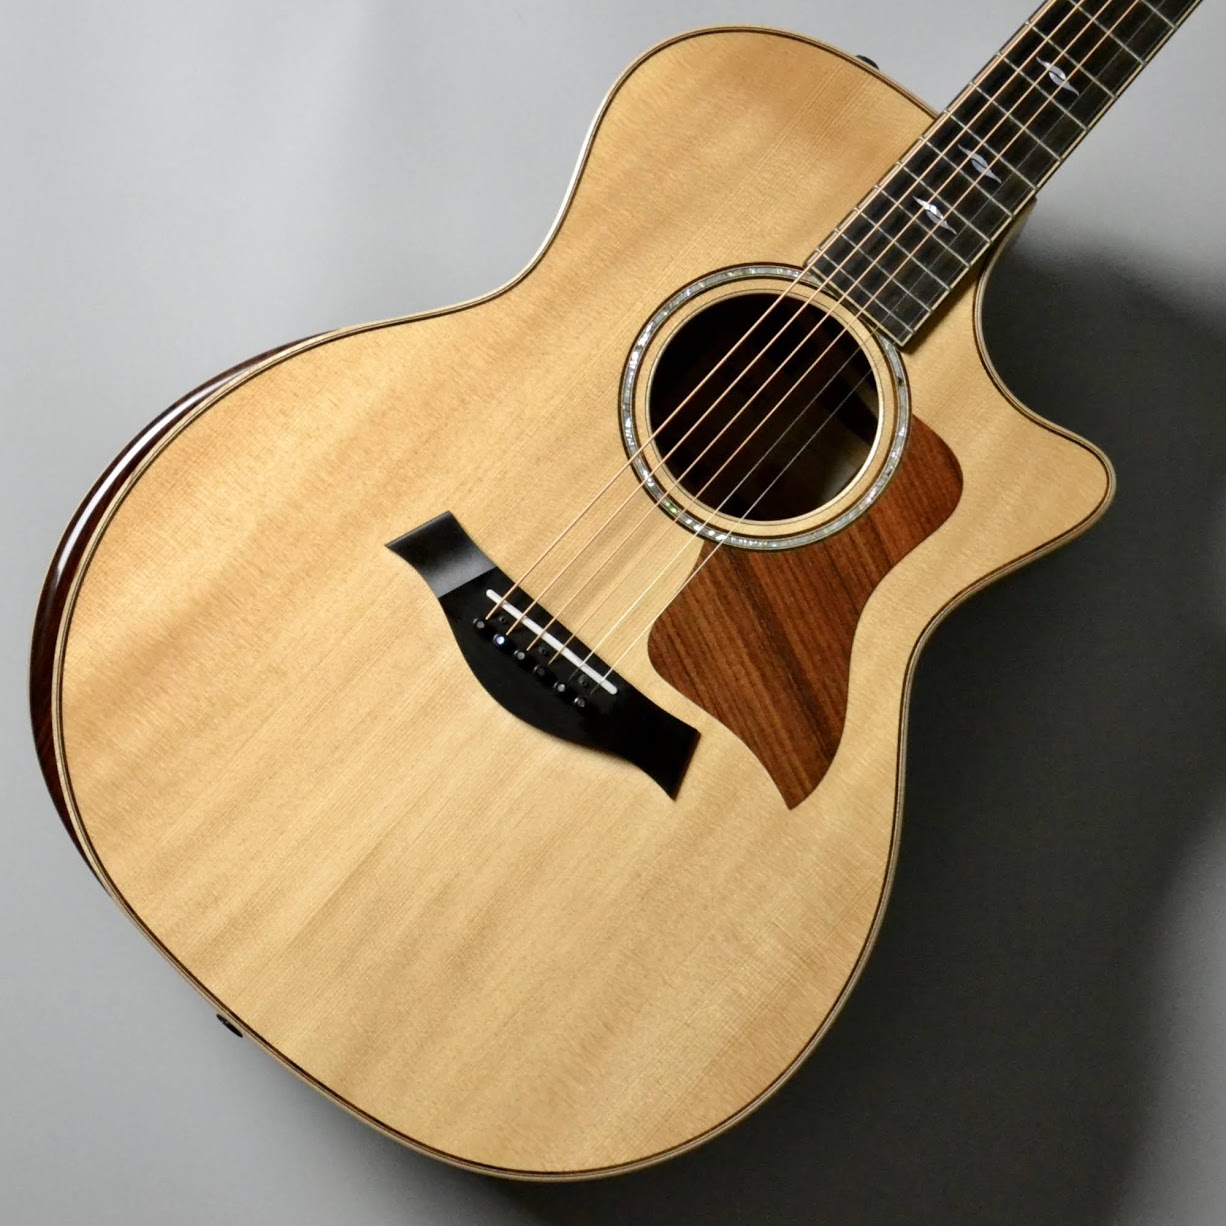 Taylor 814ce v-classアコースティックギター - アコースティックギター